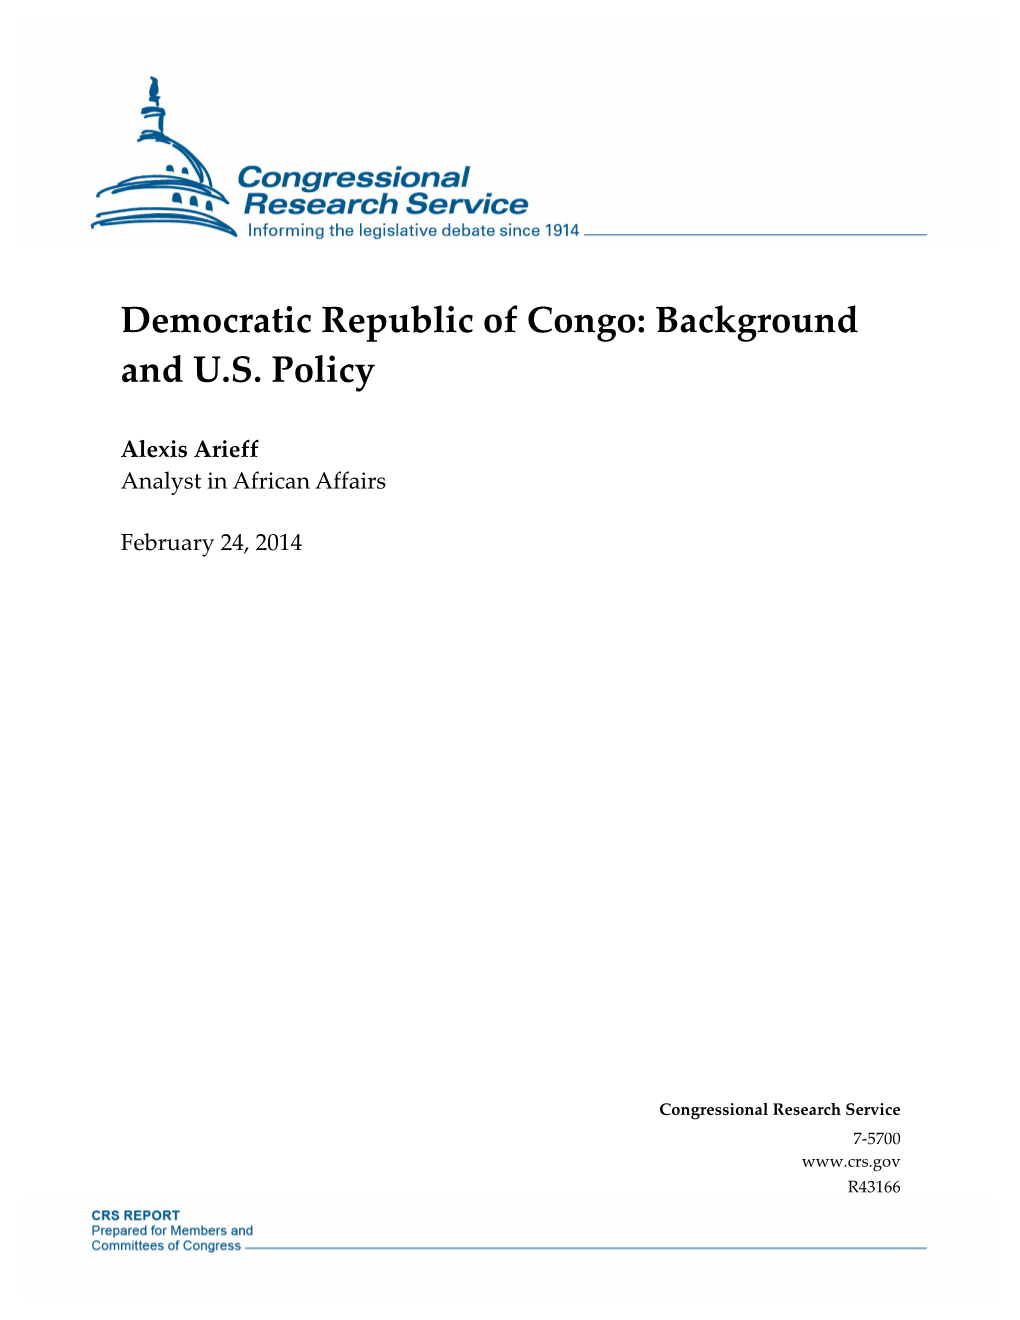 Democratic Republic of Congo: Background and U.S. Policy